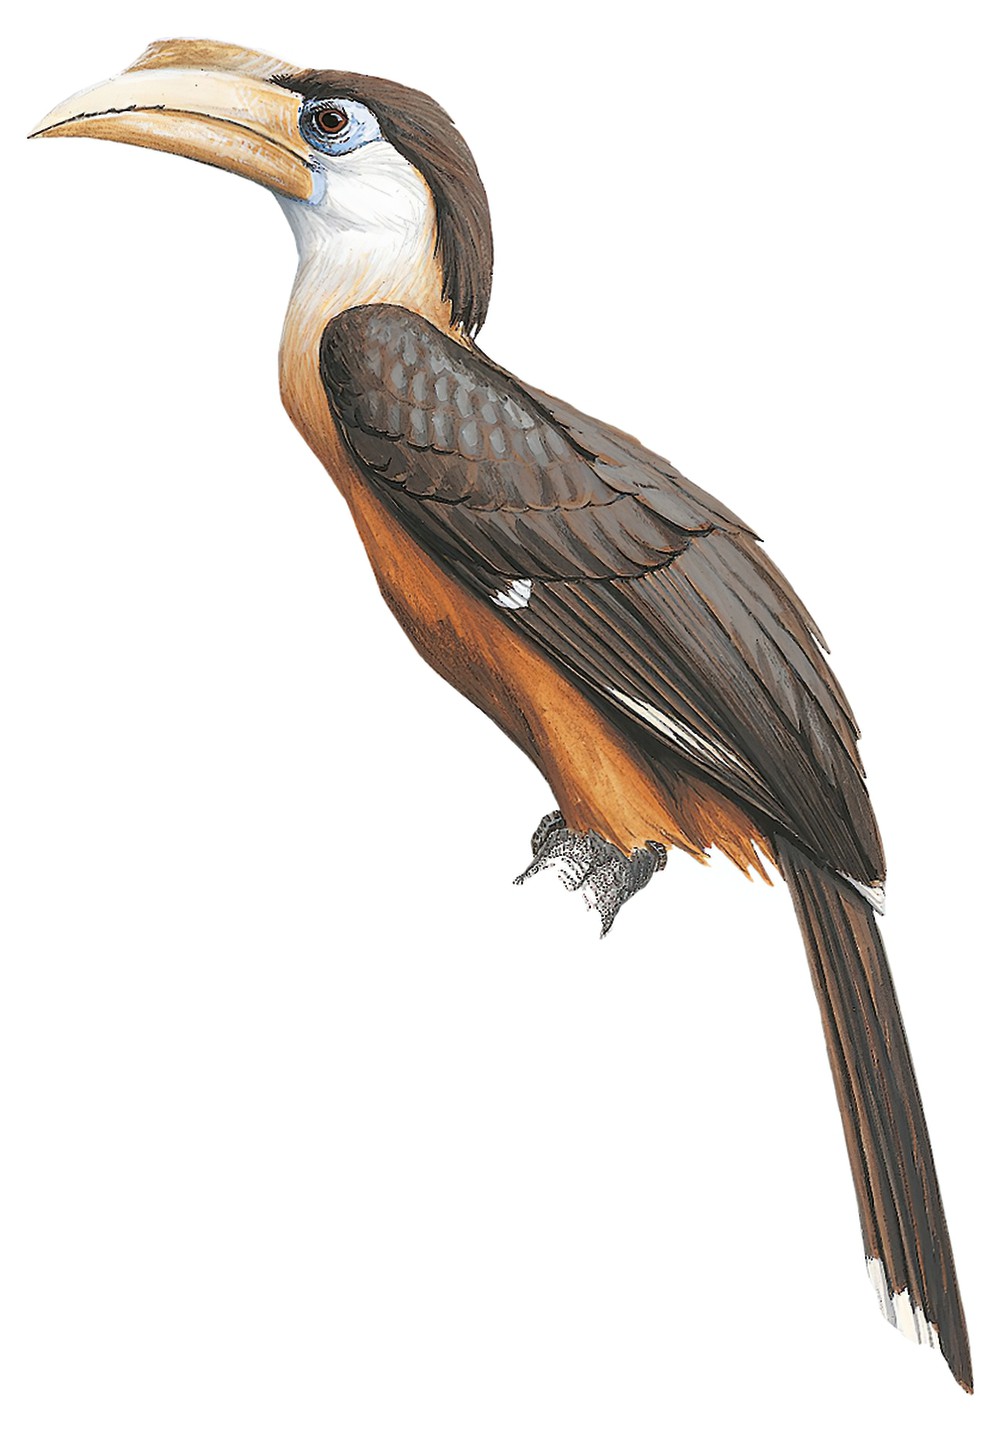 Brown Hornbill / Anorrhinus austeni